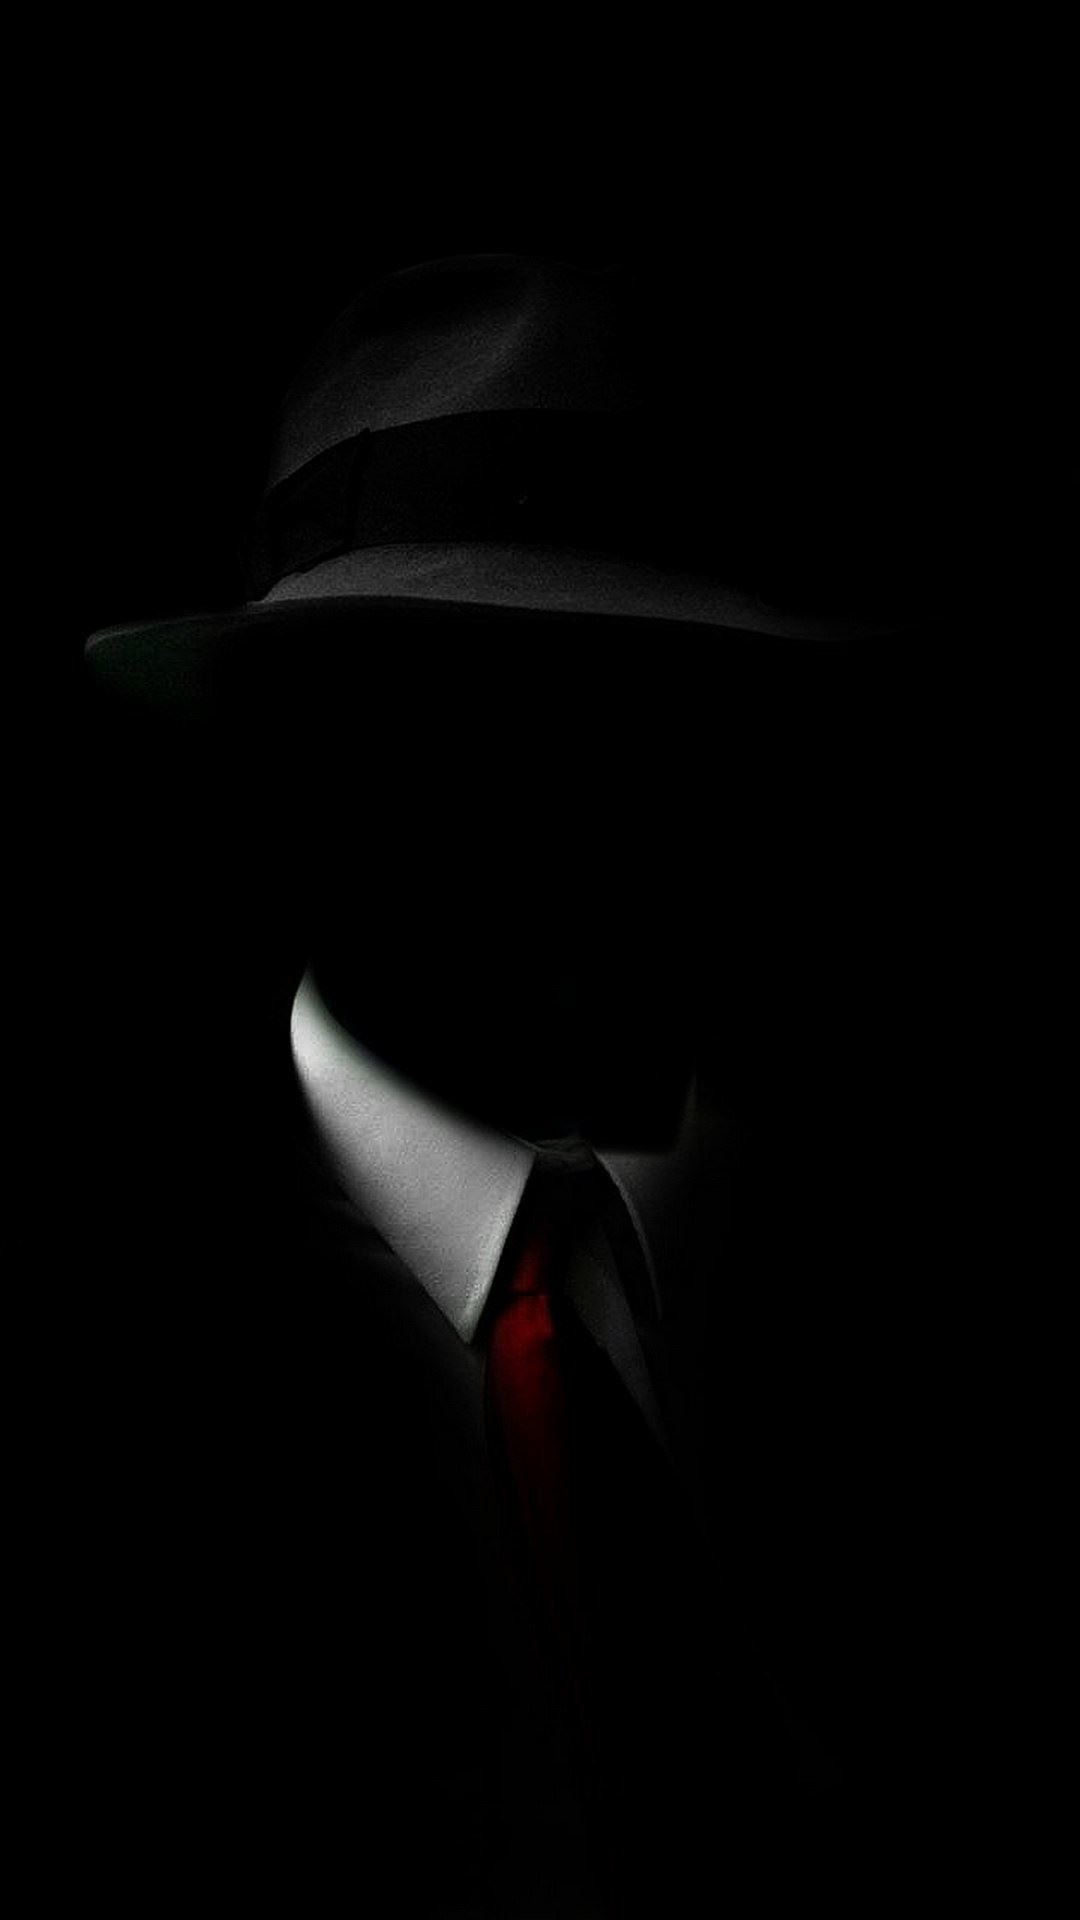 1080x1920 Shadow Man Black Suit Hat Red Tie iPhone 6 Plus HD Wallpaper ...